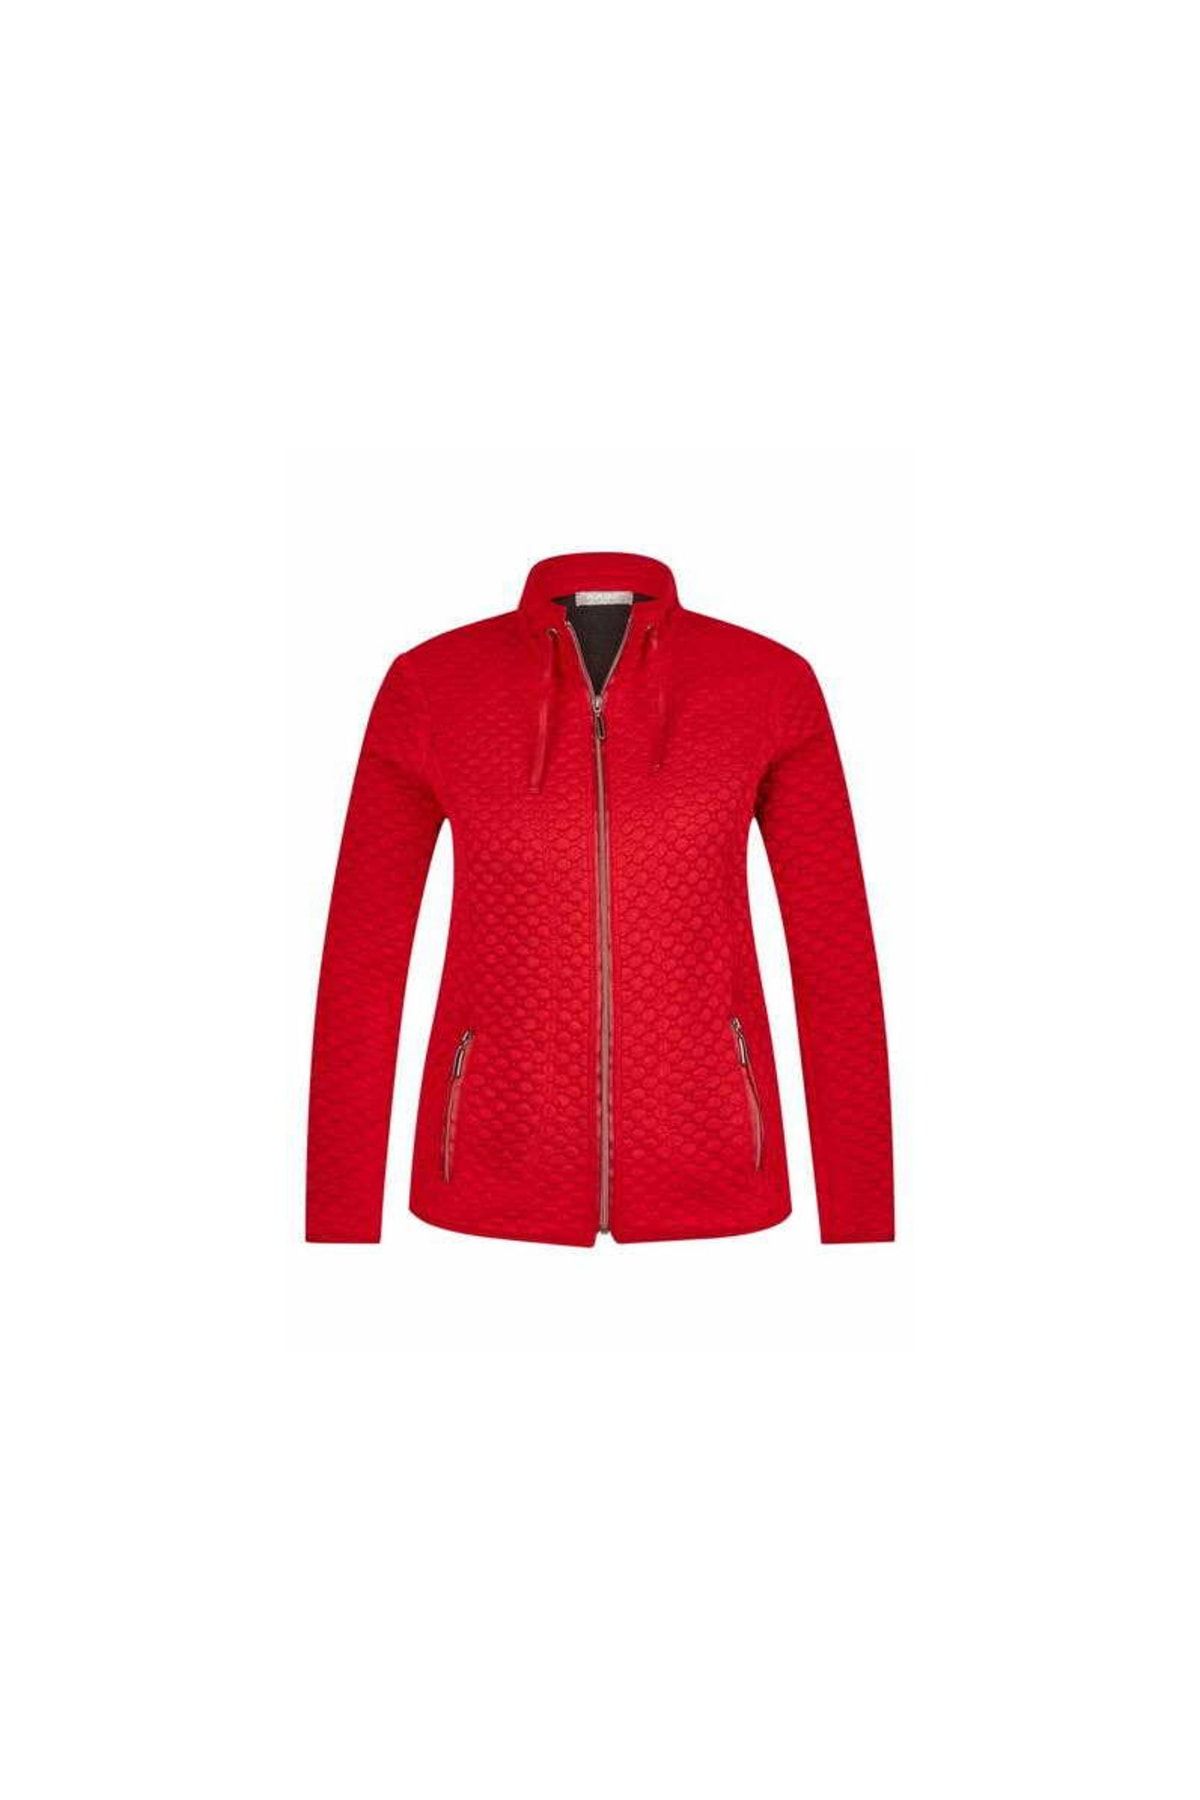 Rabe 1920 Jacket - Red - Regular fit - Trendyol